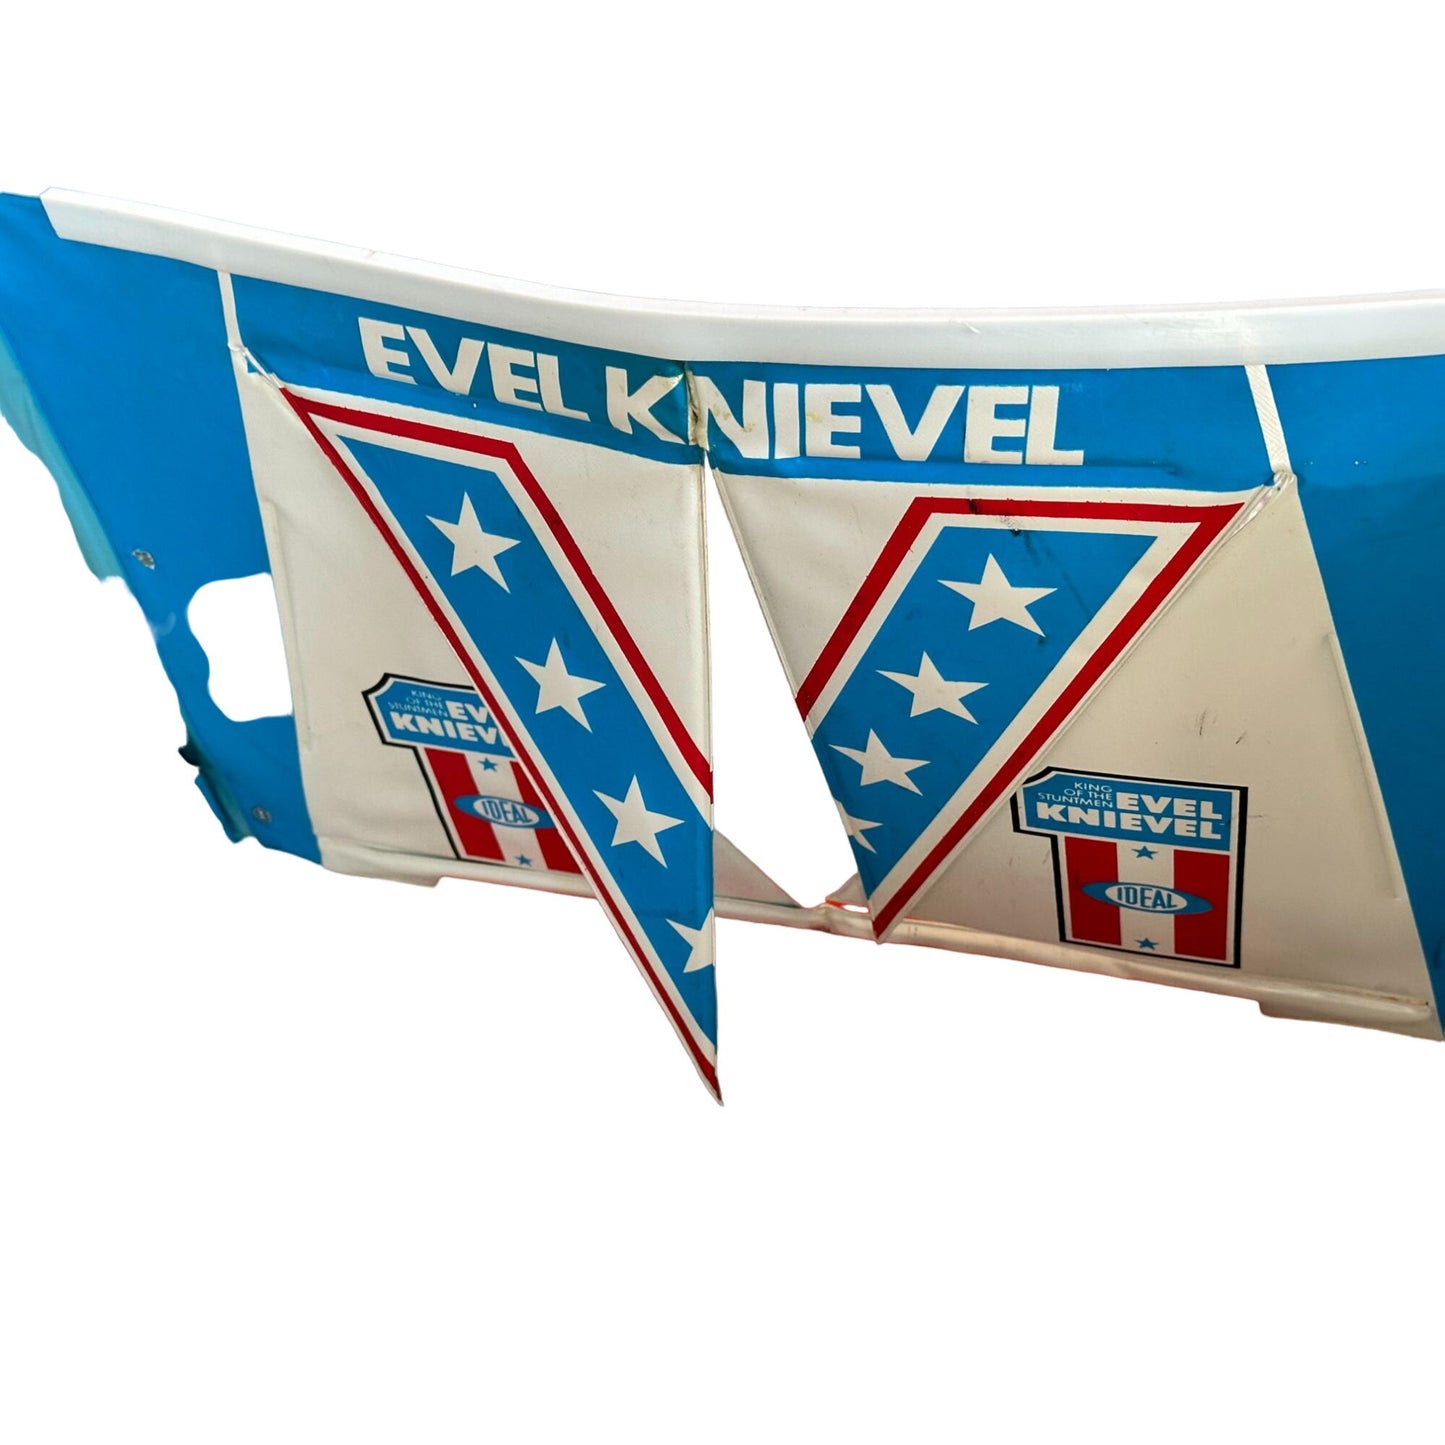 Vintage Ideal 1974 Evel Knievel Stunt Stadium Set Collectible Rare find